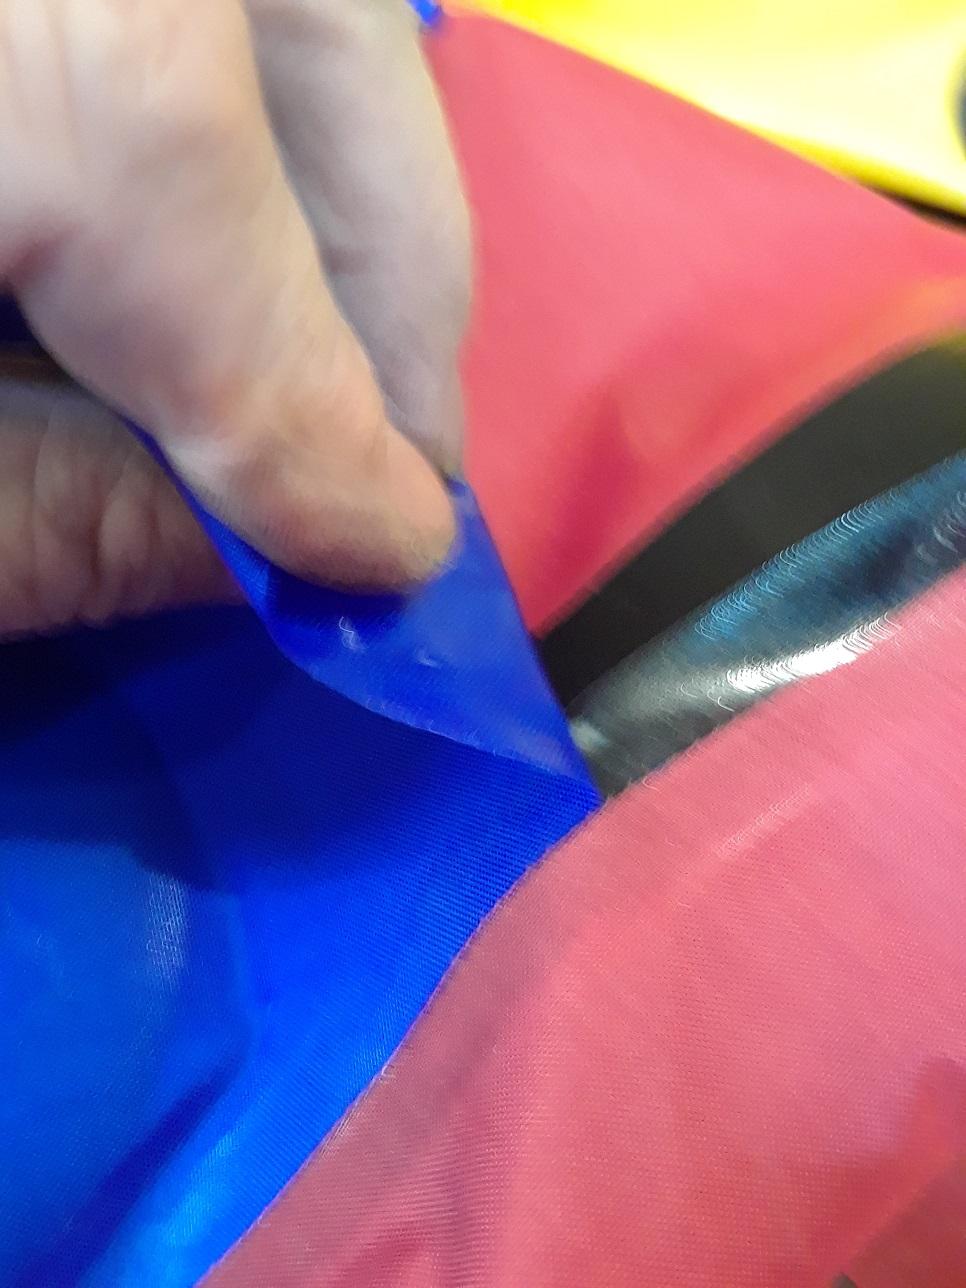 Peeling the blue off the black seam strip